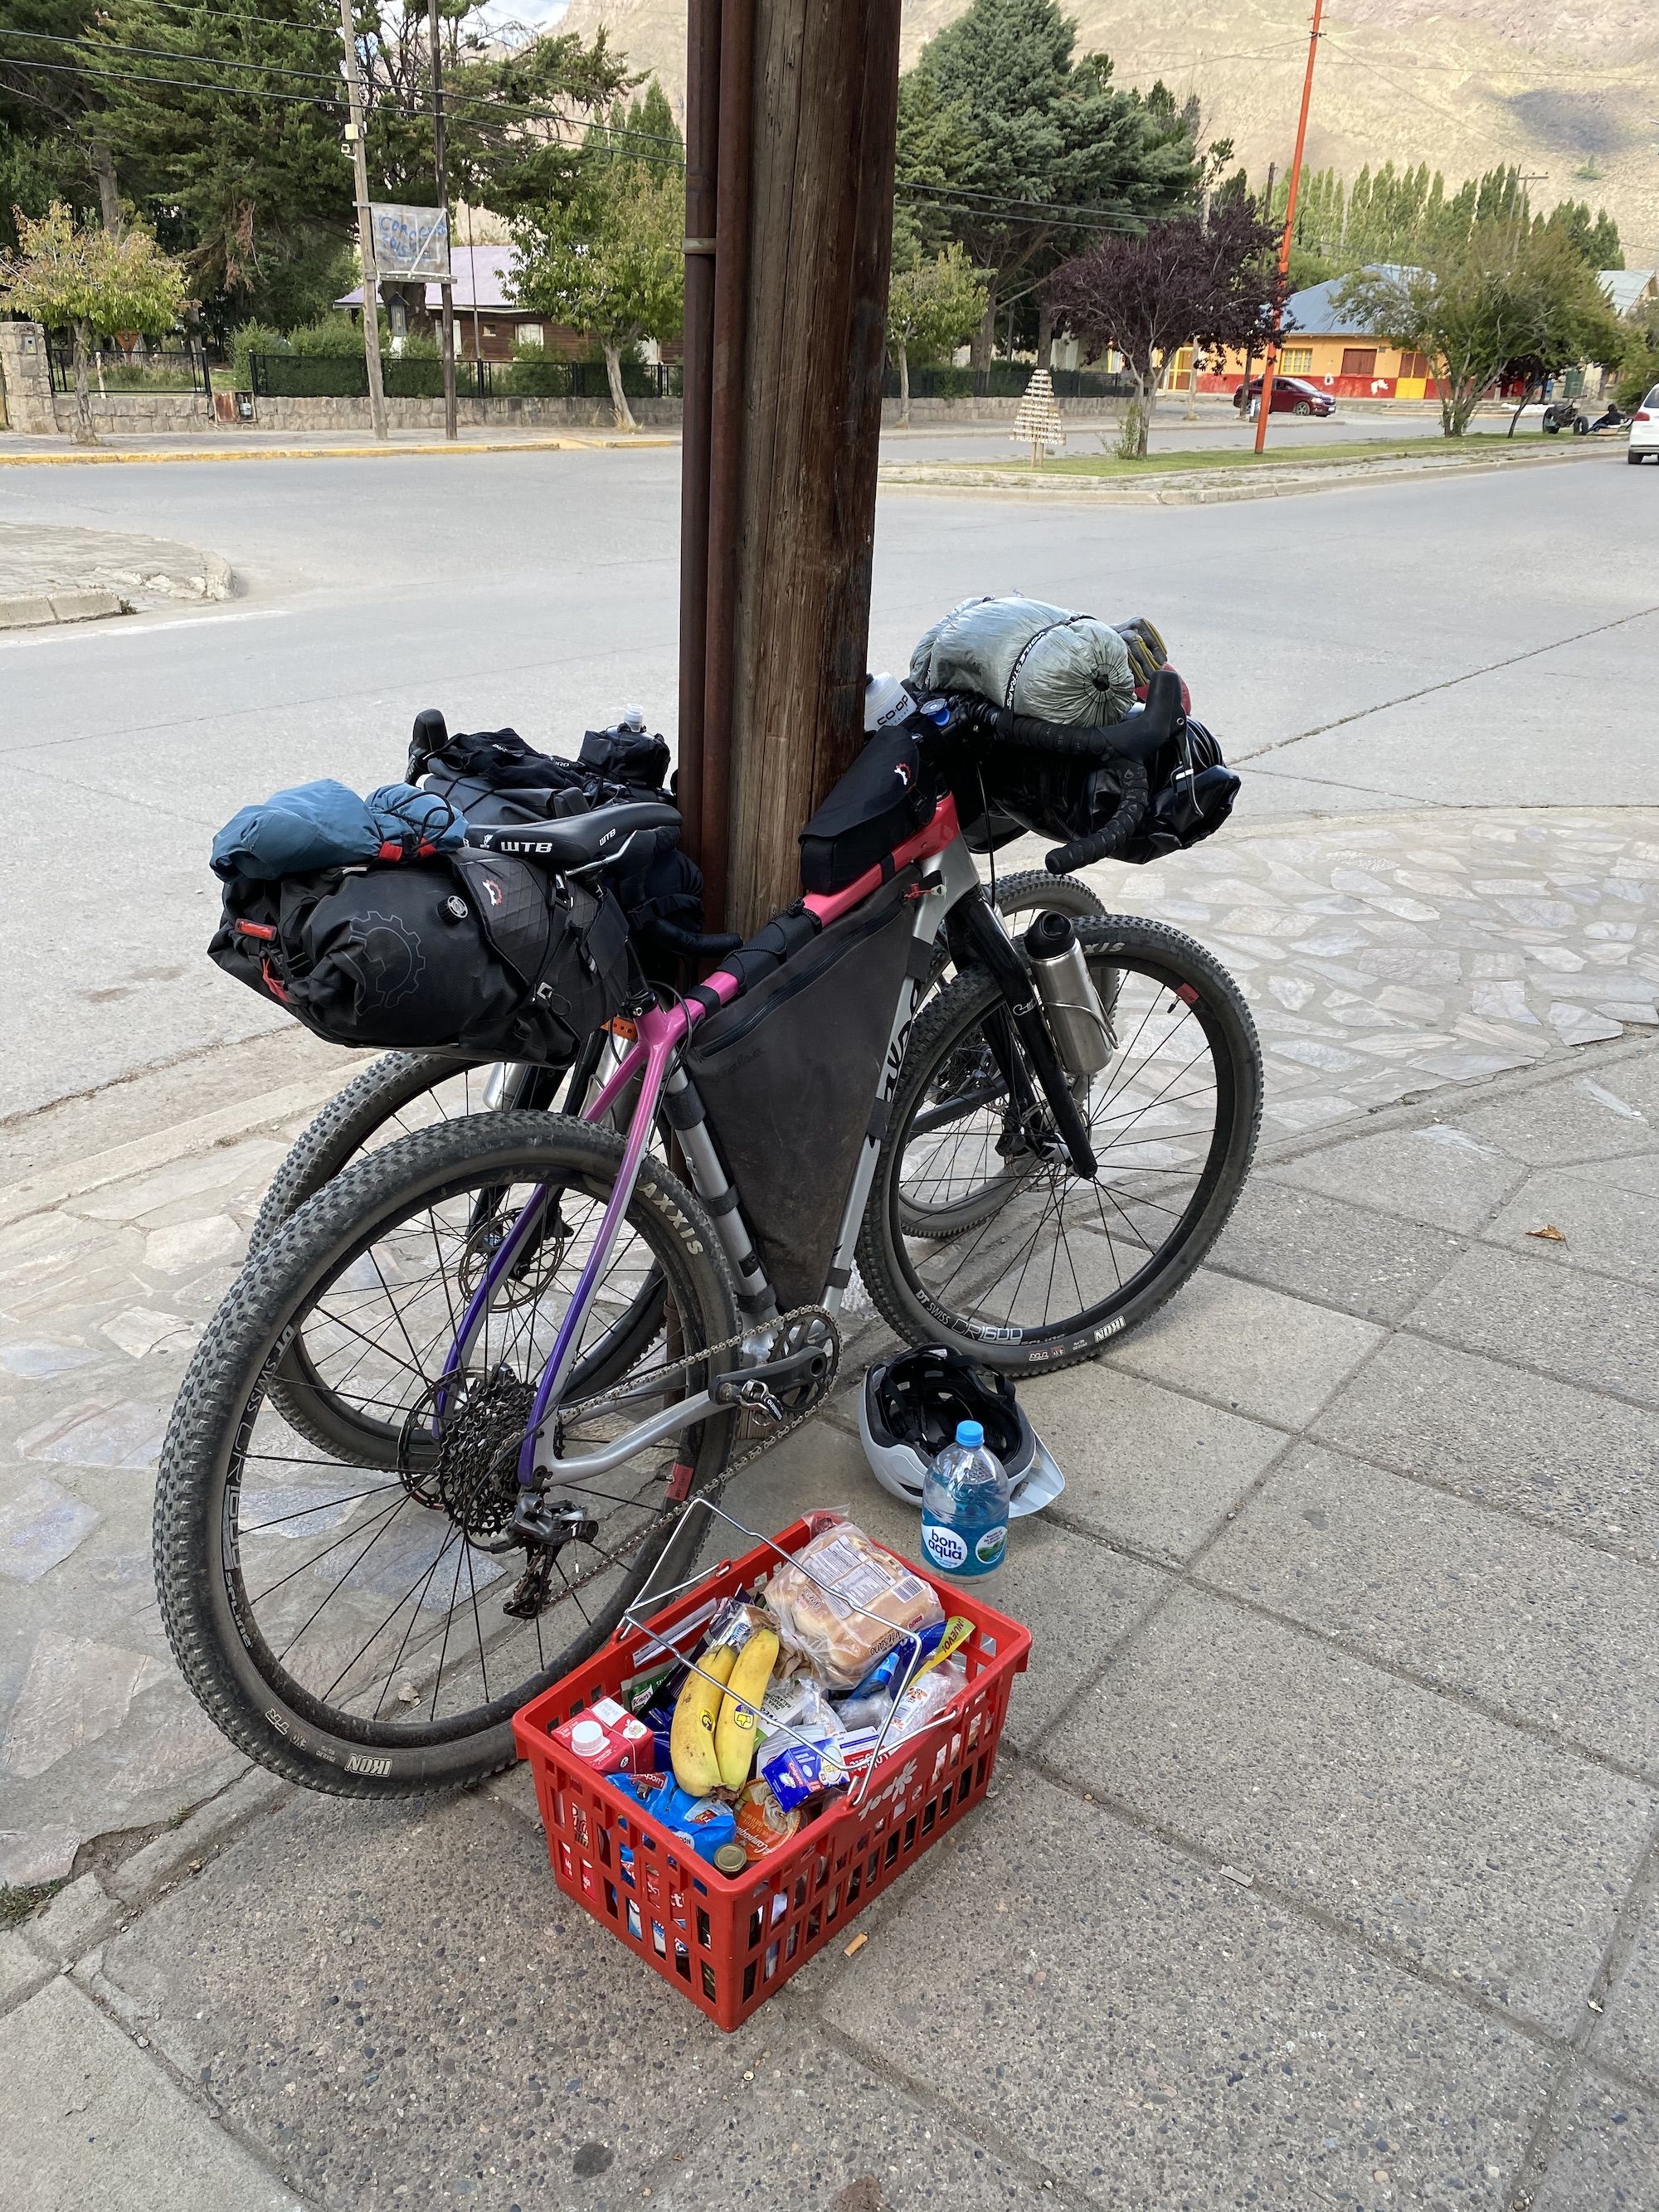 A full shopping basket next to bikes. 